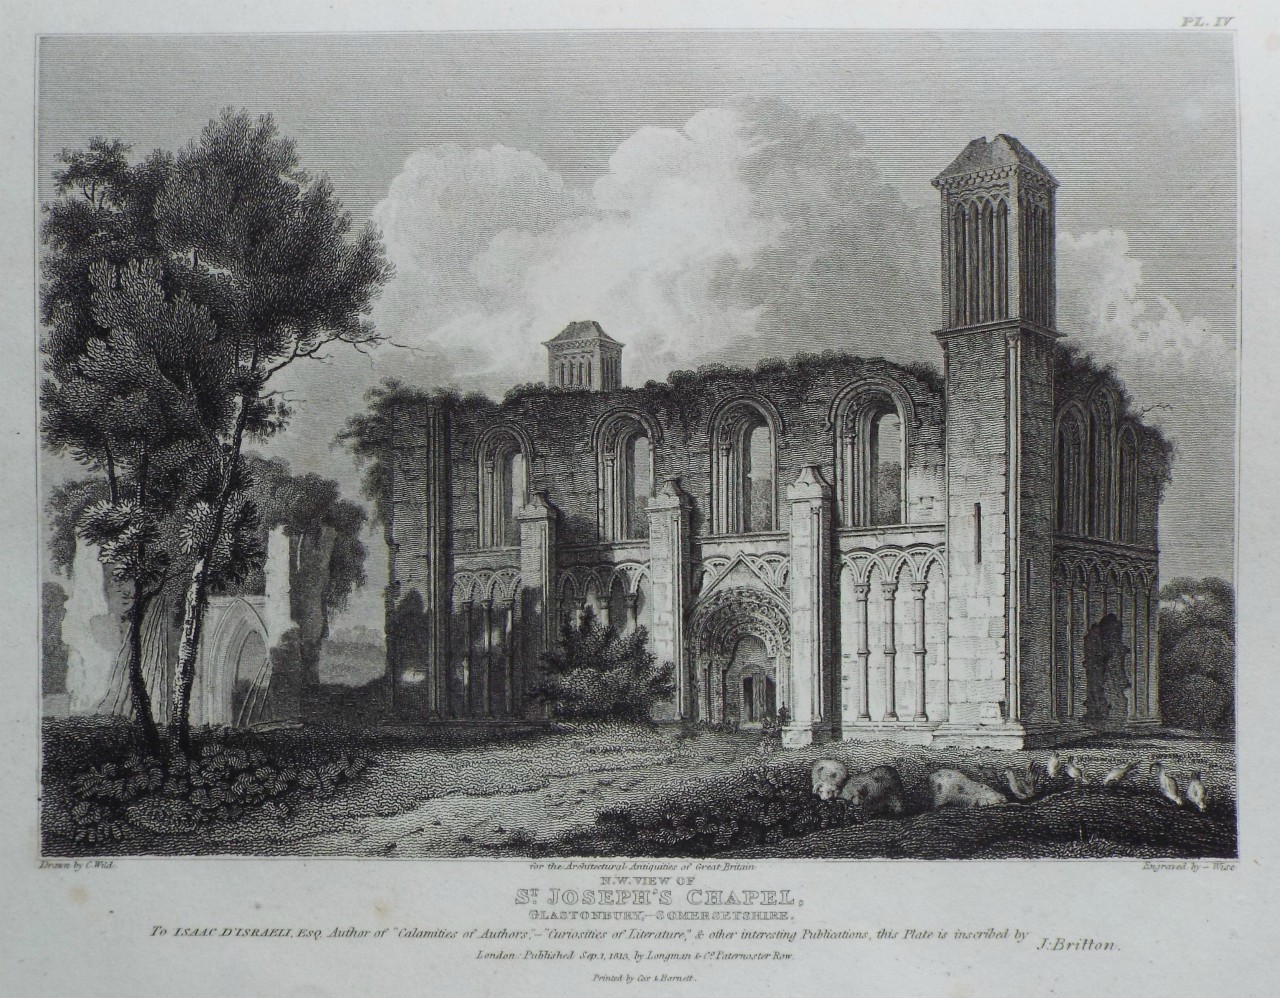 Print - N. W. View of St. Joseph's Chapel, Glastonbury, Somersetshire. - 